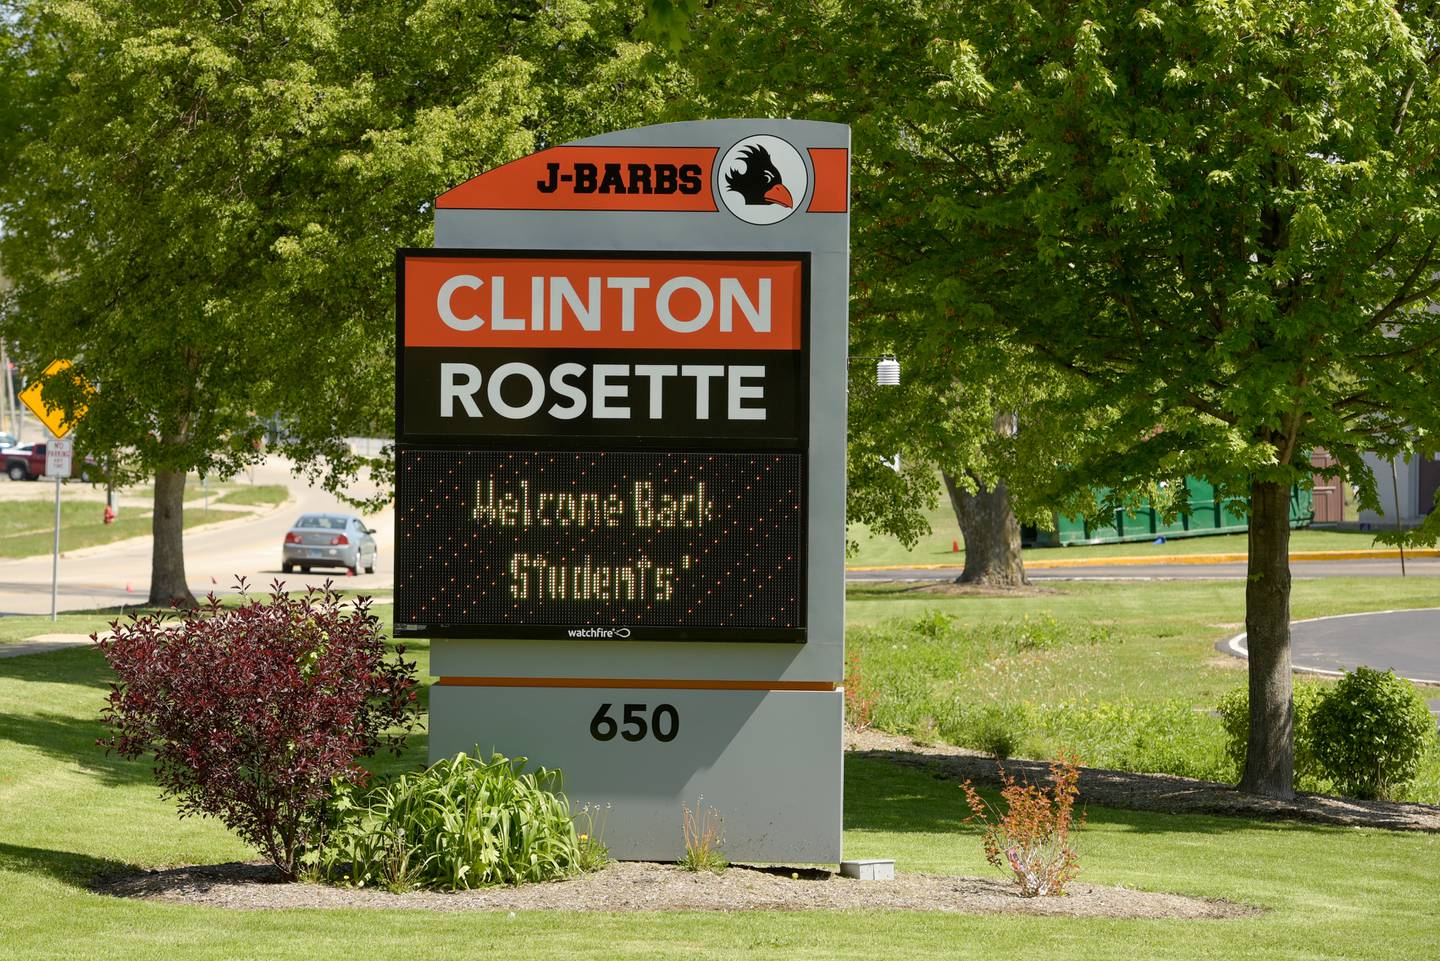 School District 428, Clinton Rosette Middle School sign in DeKalb, IL